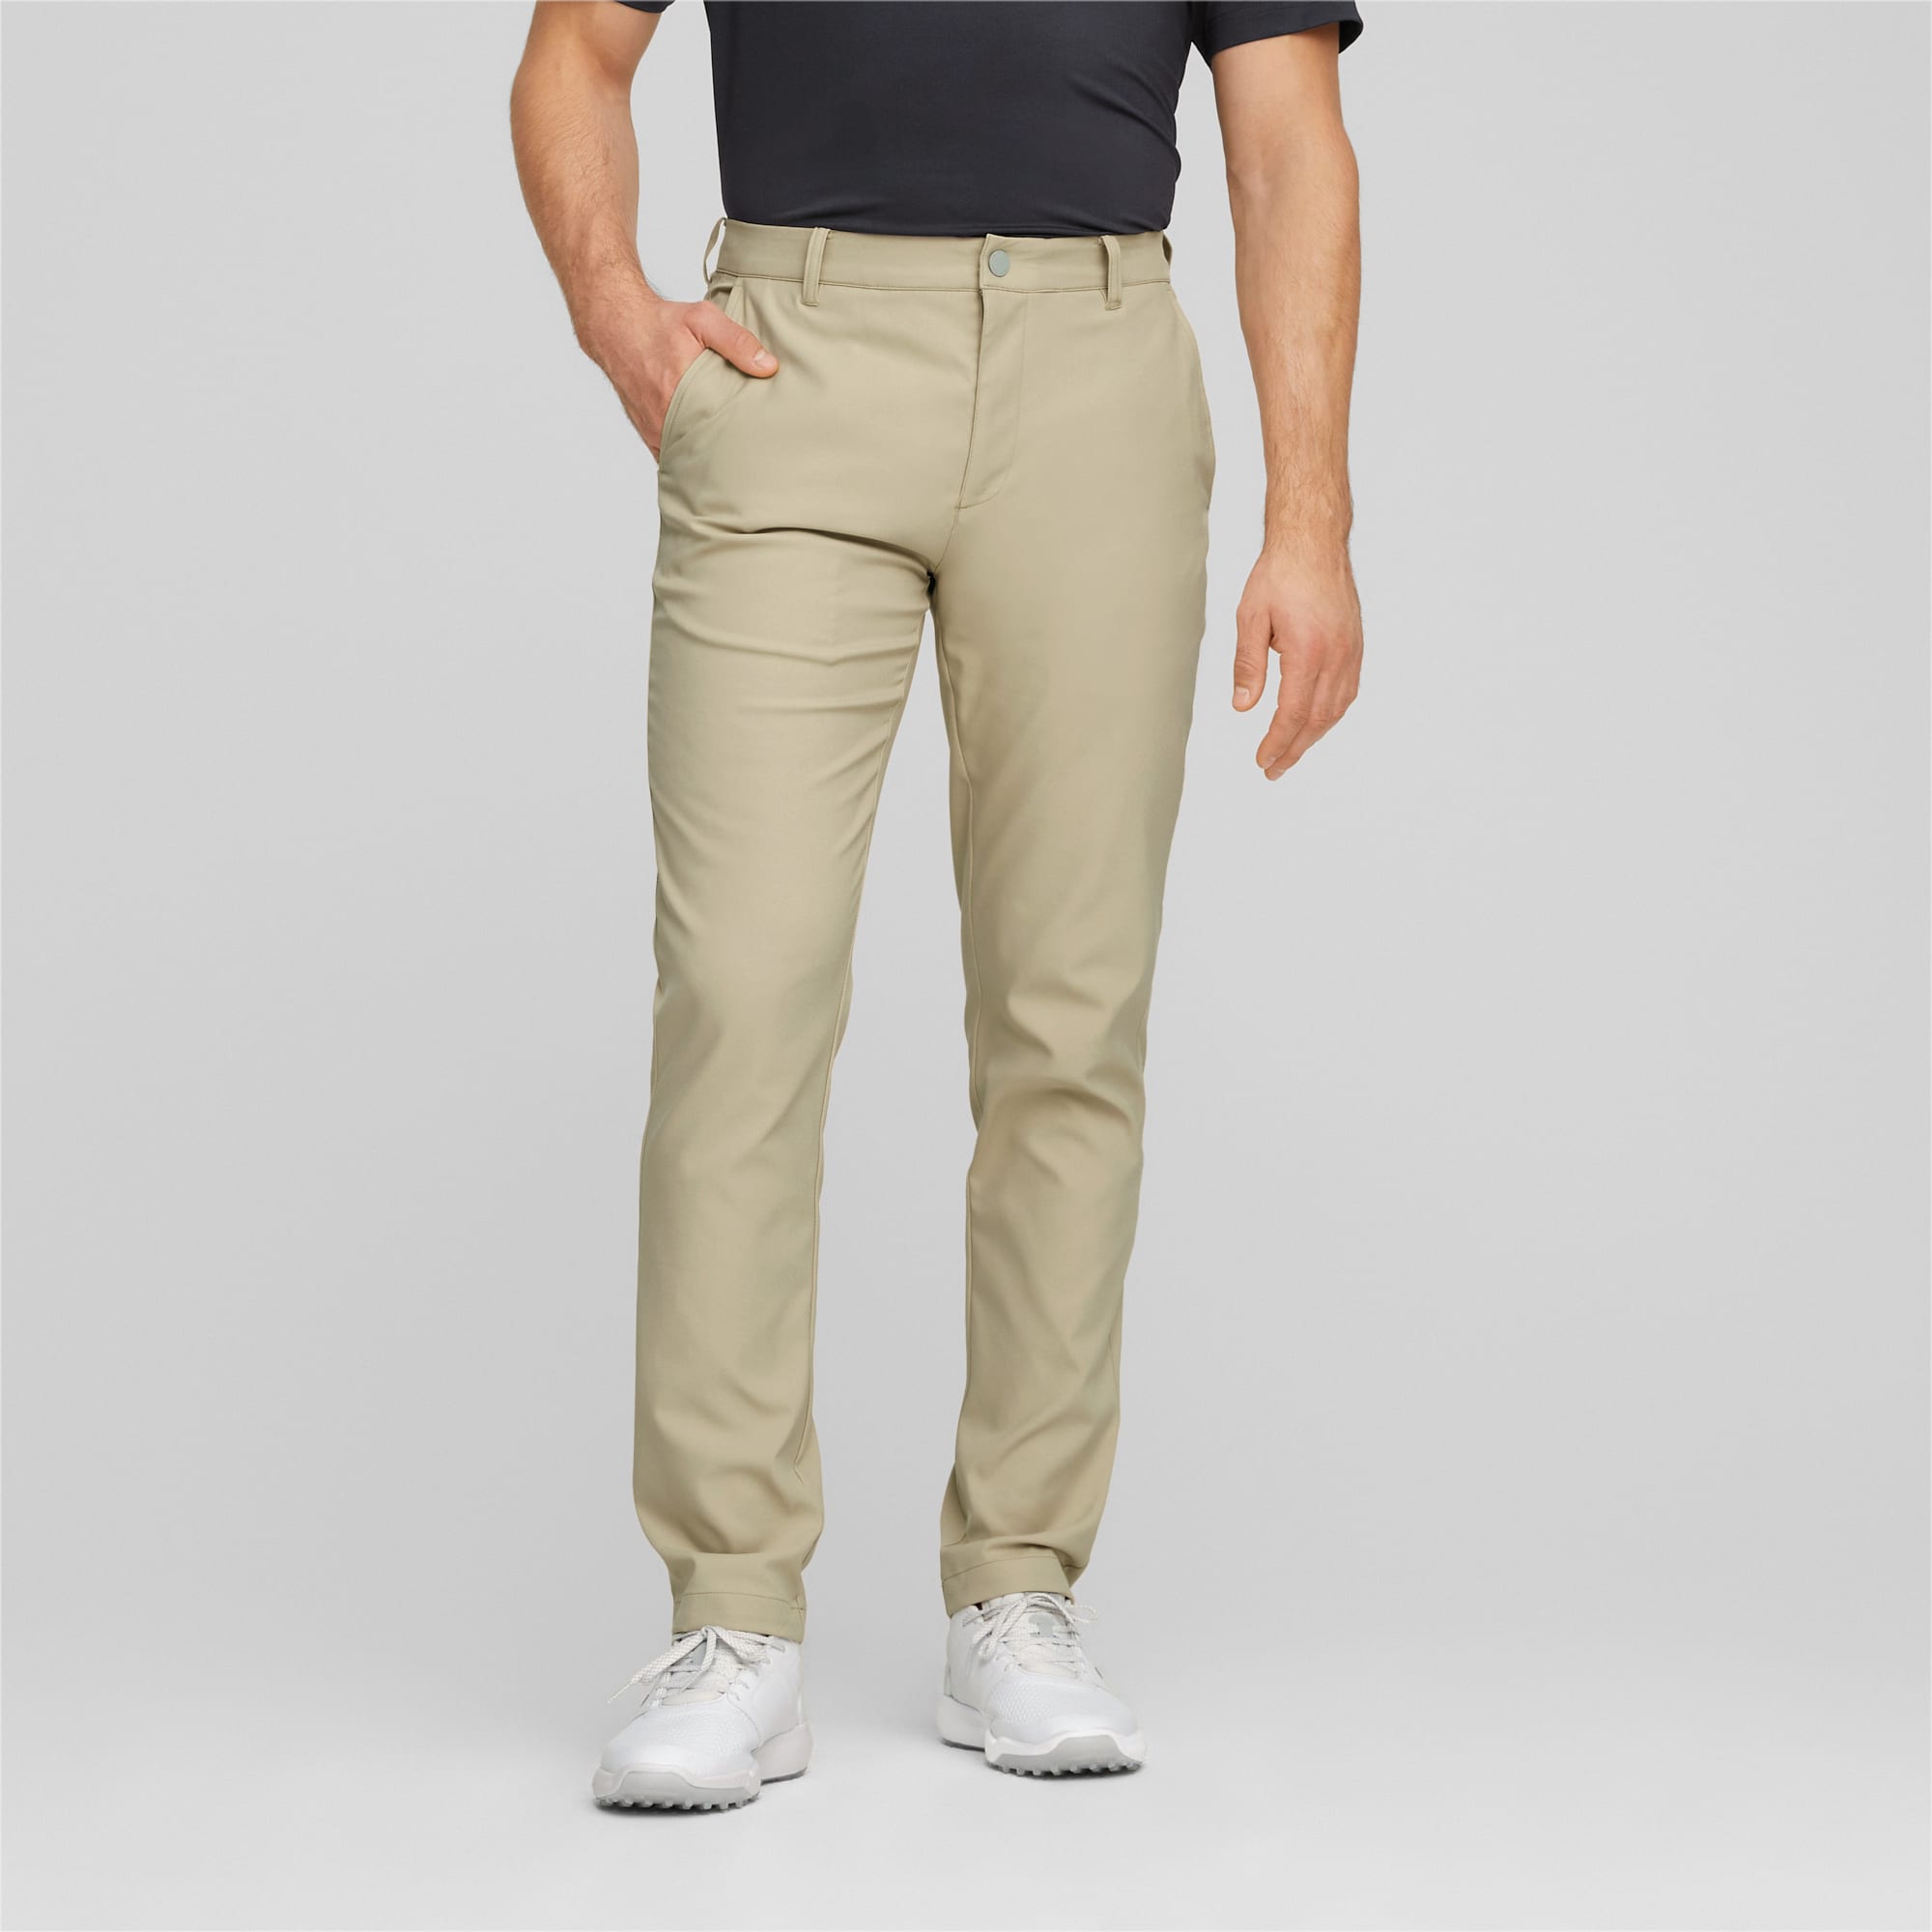 PUMA Dealer Tailored Golf Pants Men, Alabaster